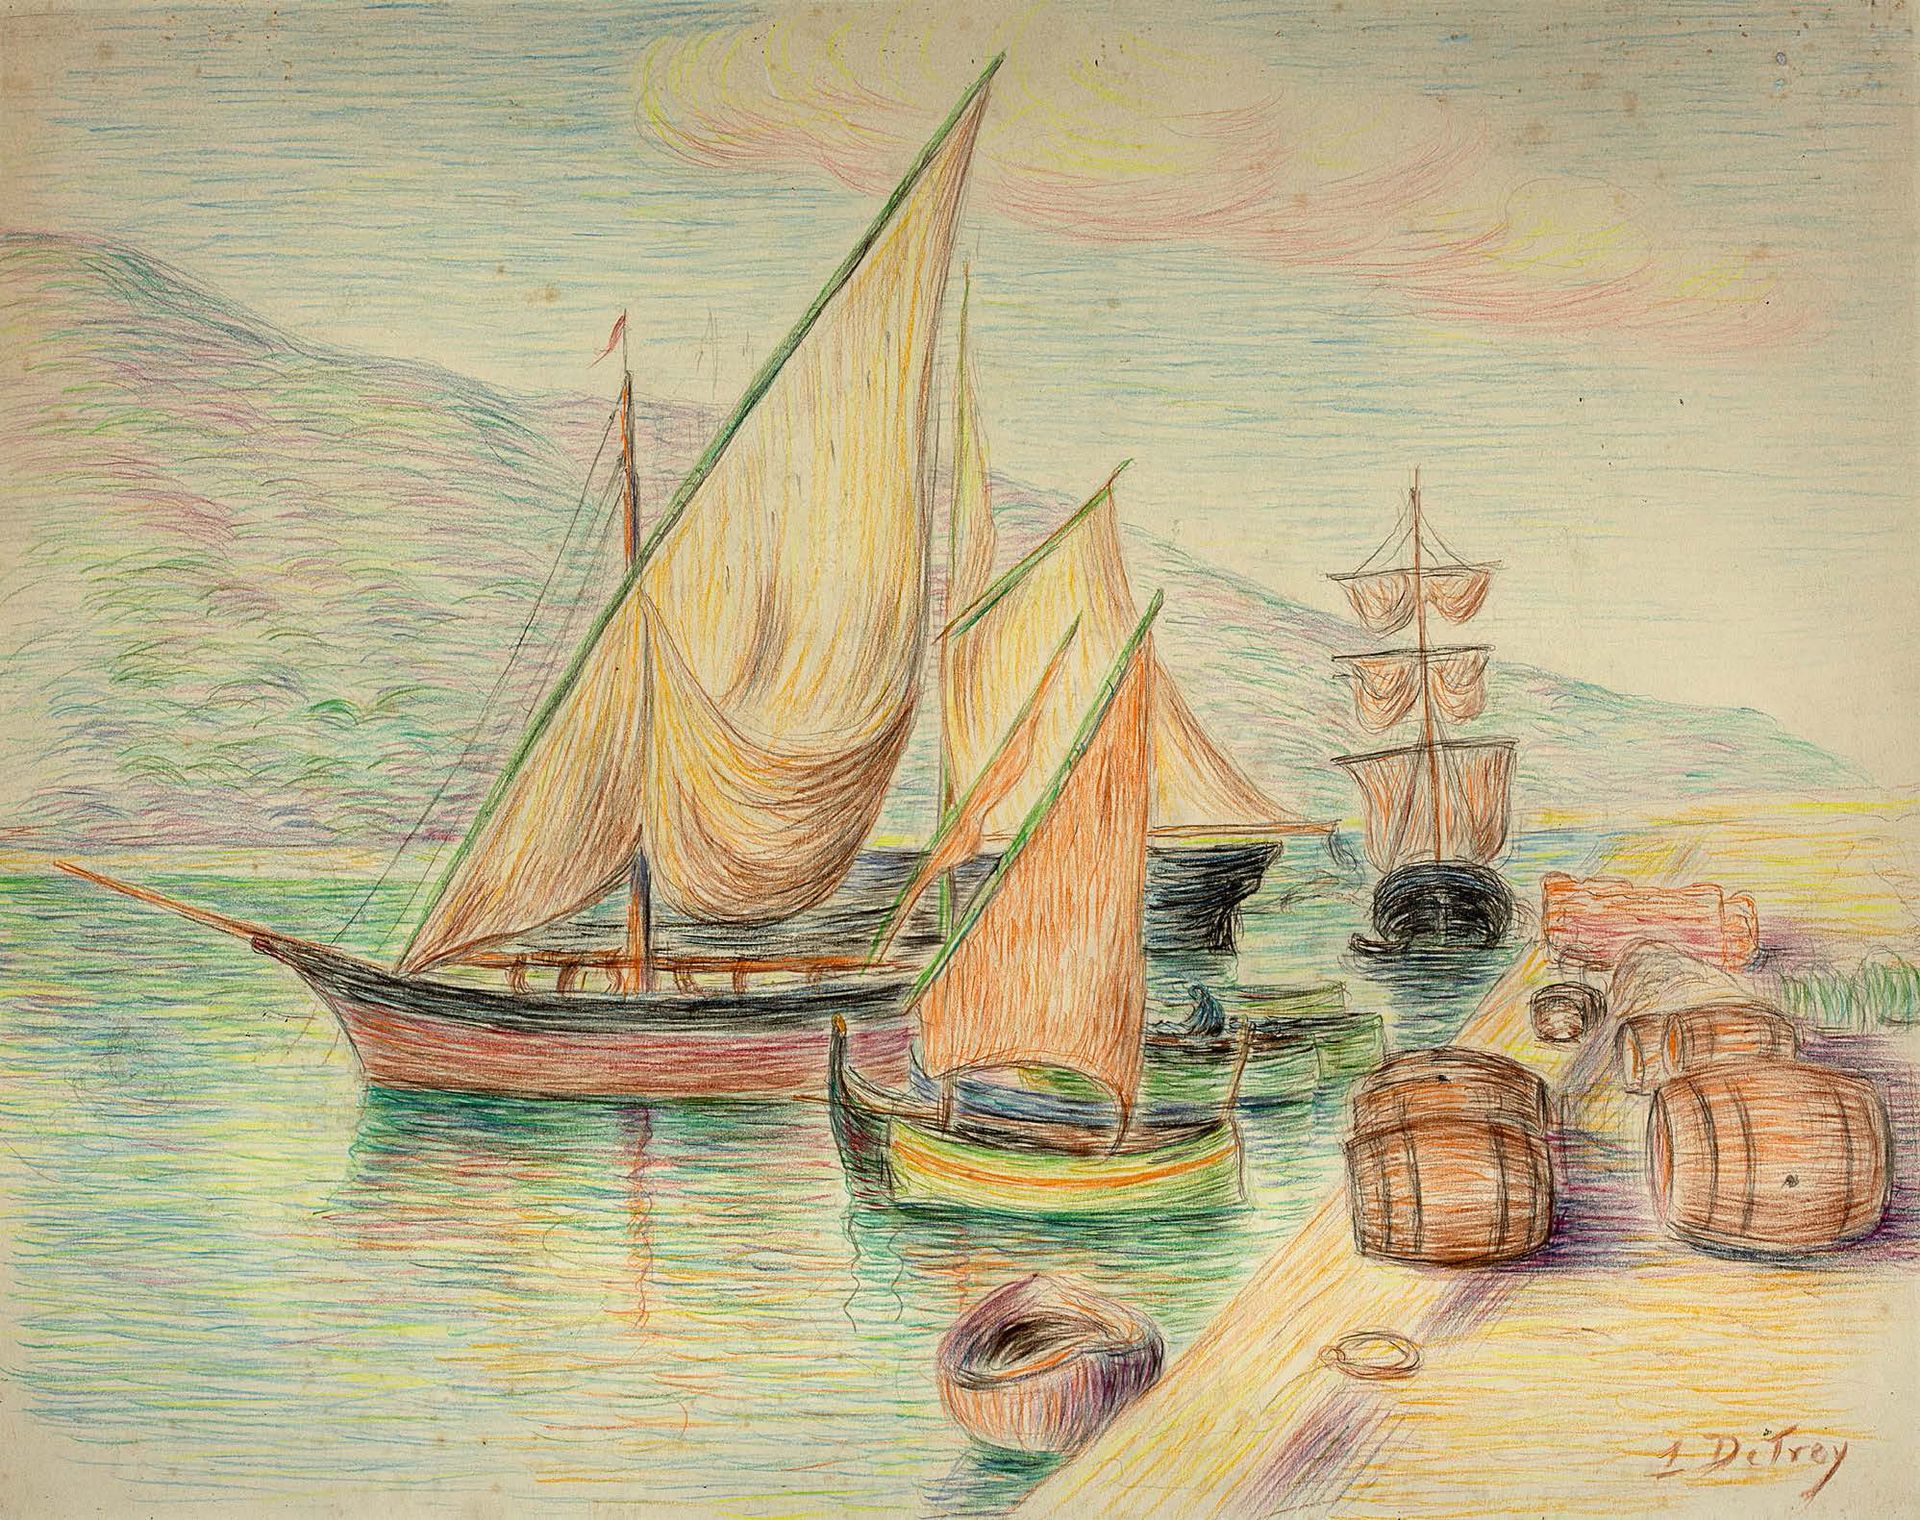 Léon DETROY (1857 - 1955) 
在登陆阶段

纸上彩色铅笔

右下方有签名

46,5 x 59 cm - 18 1 / 4 x 23 1&hellip;